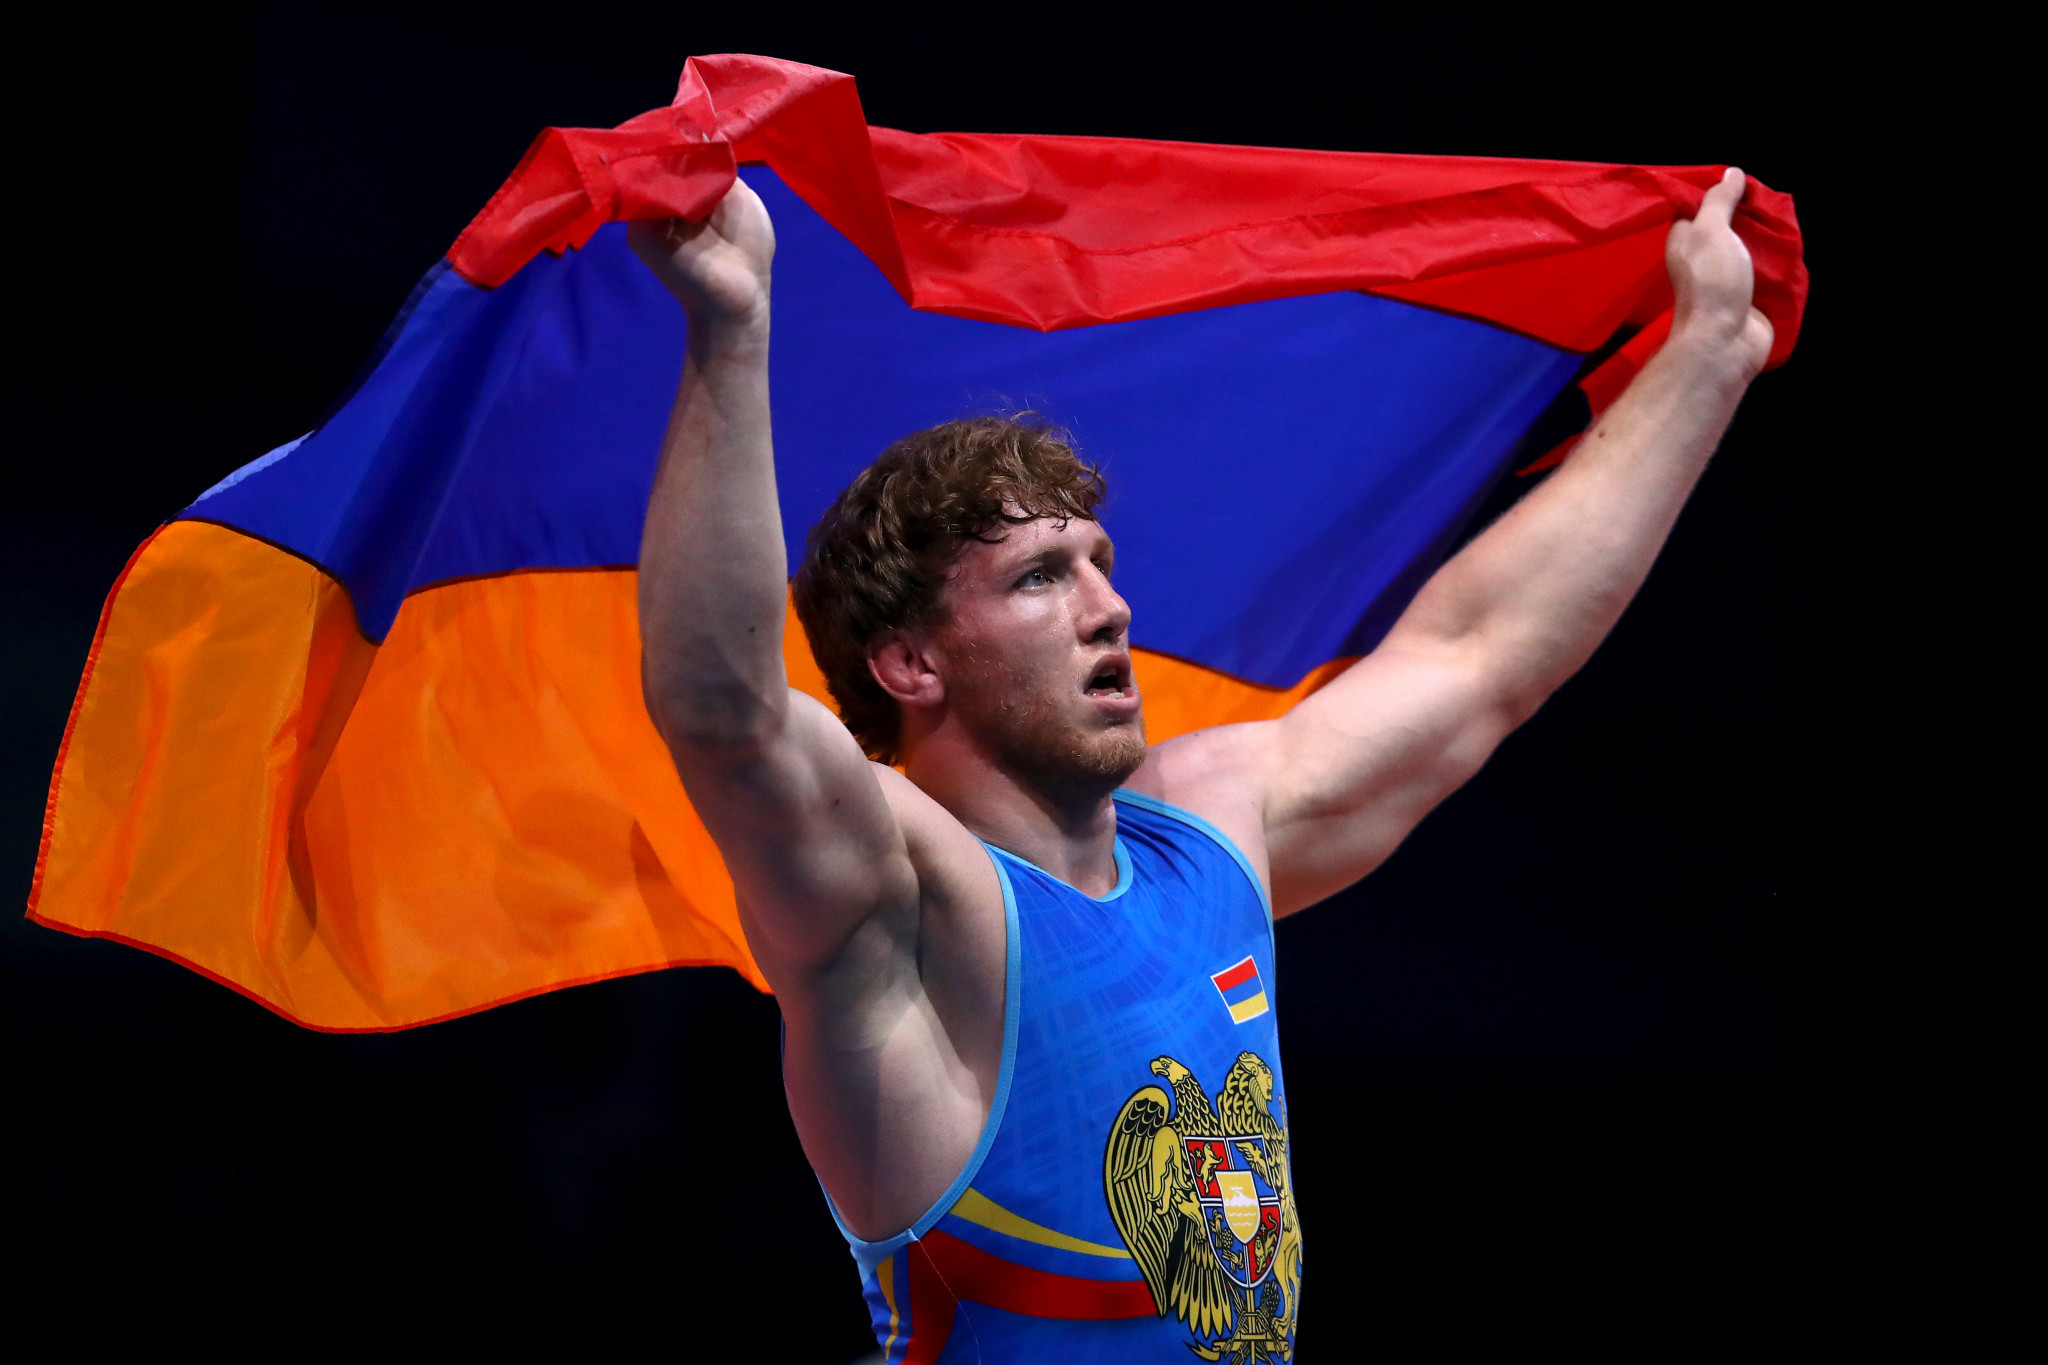 Armenia claim two Greco-Roman titles on day three of European Wrestling Championships